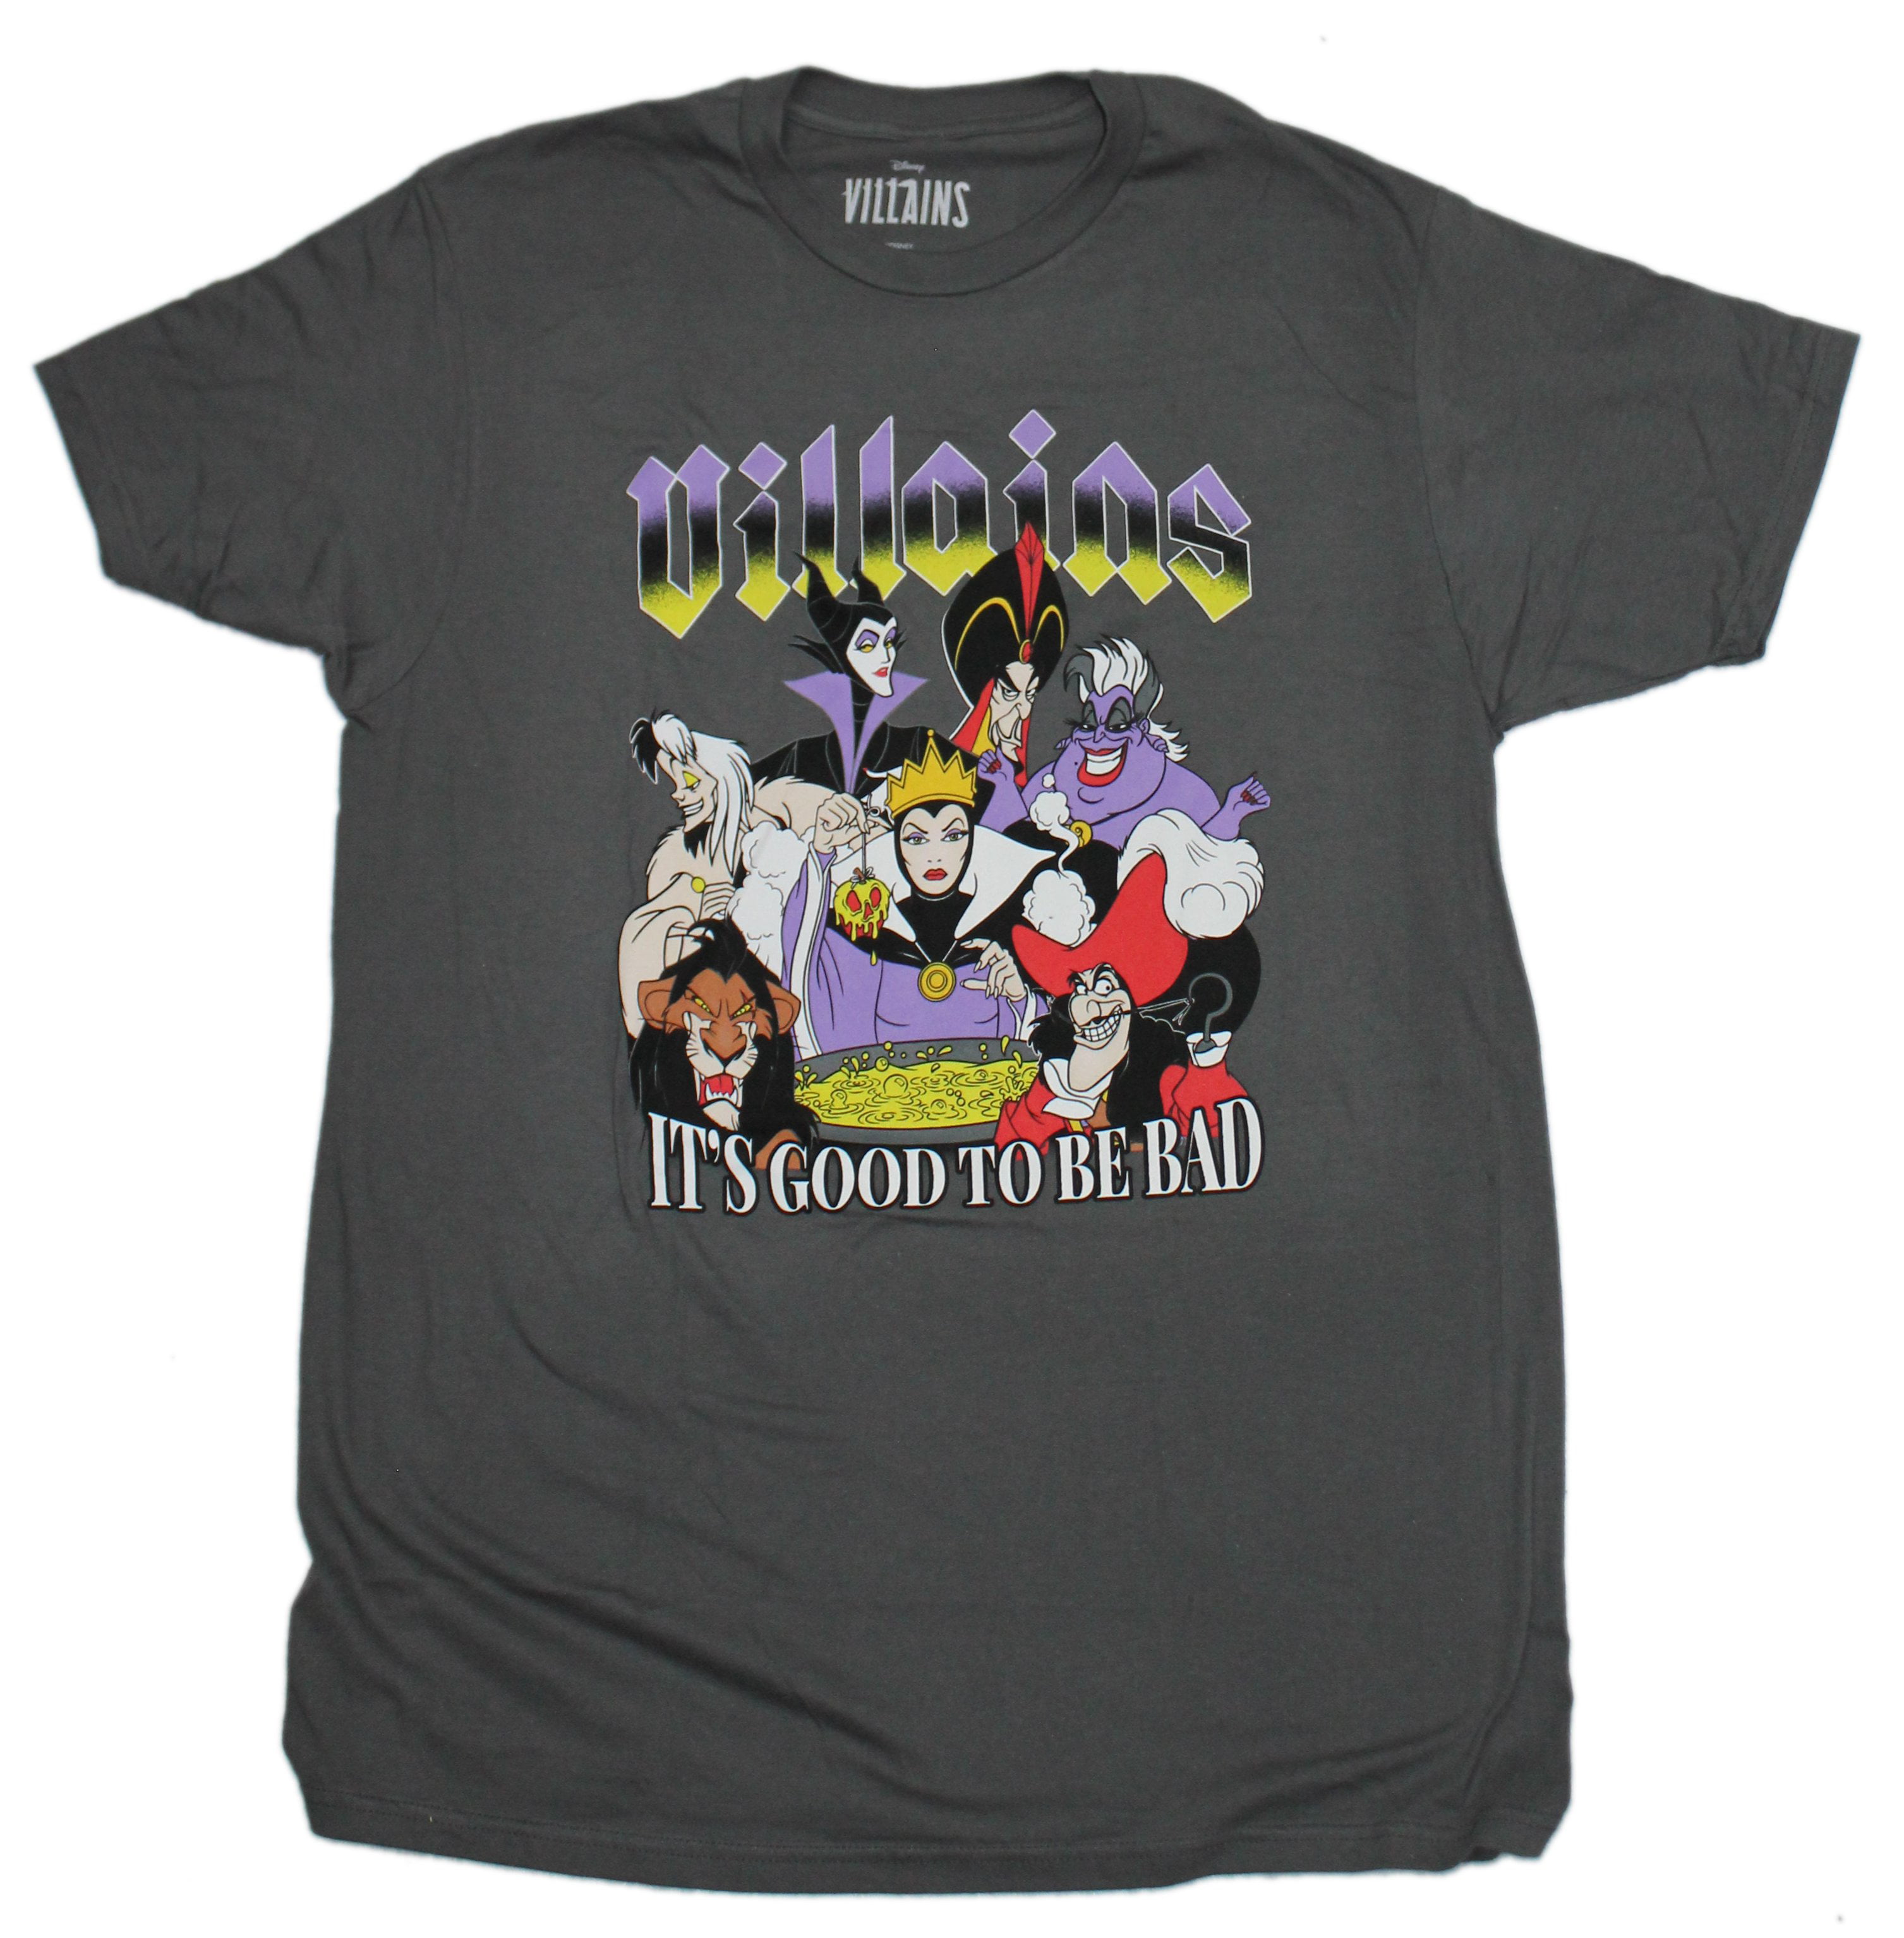 Disney Villains Mens T-Shirt - It's Good to be Bad (X-Large)